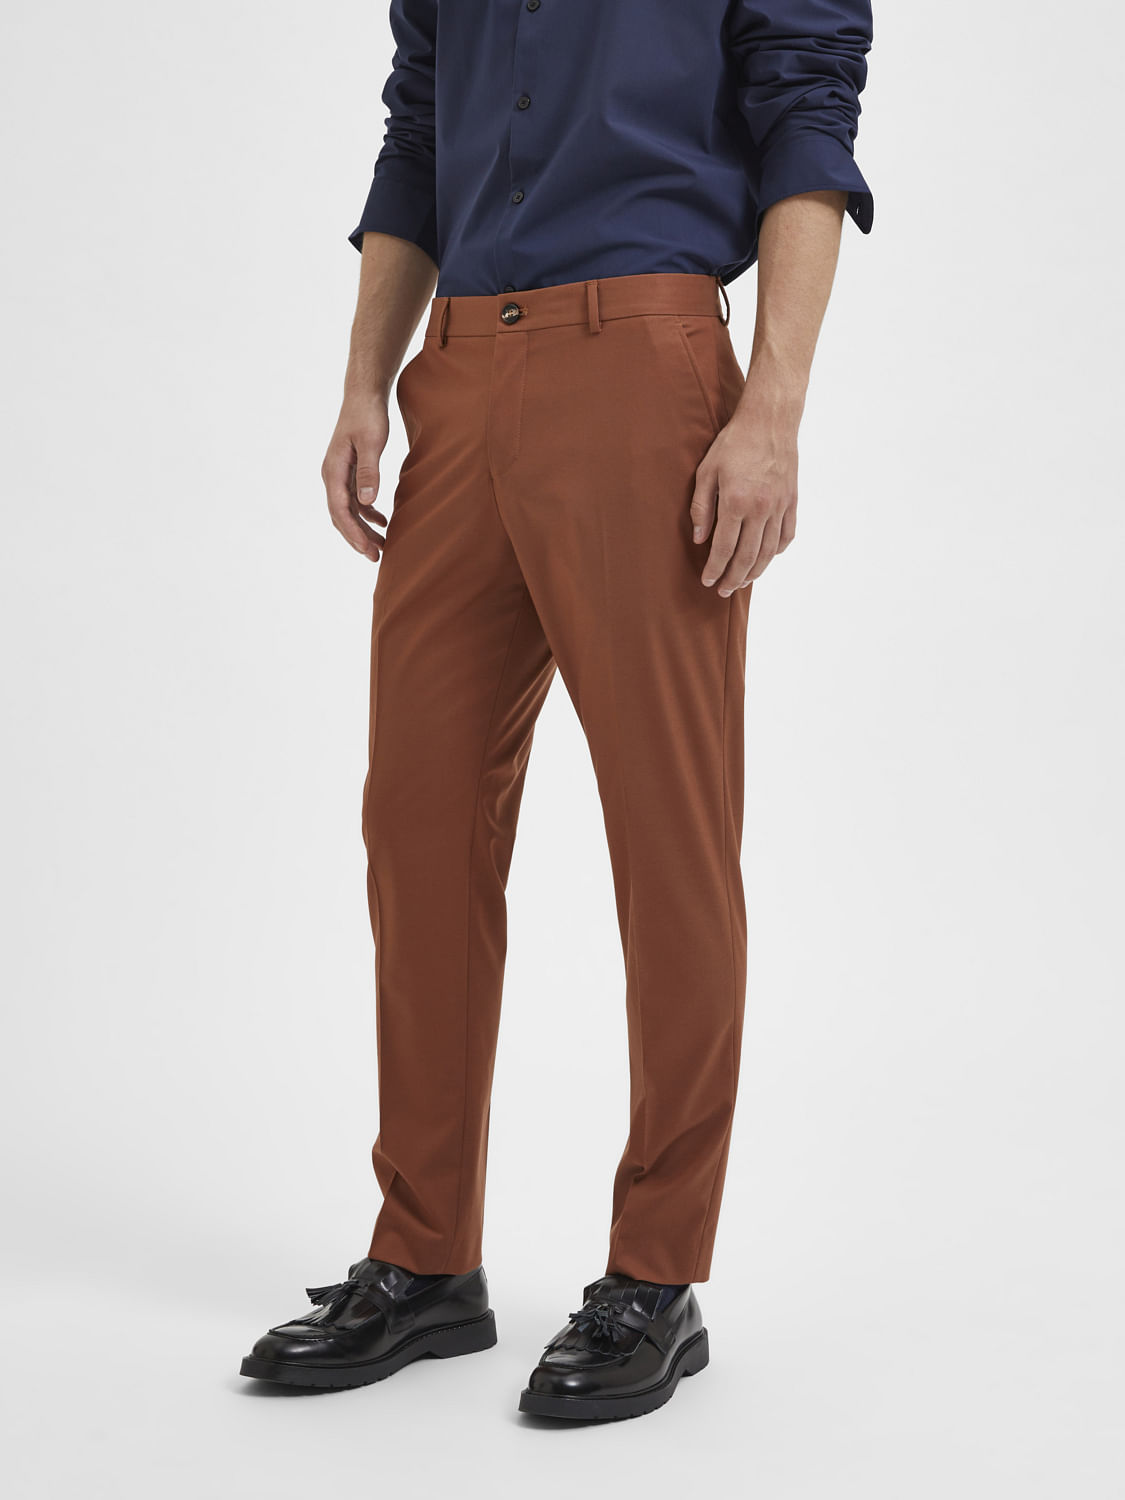 Toffigen Suit Pants for Men Straight High Waist Trousers Slim Trousers  British Style  Lazada Singapore